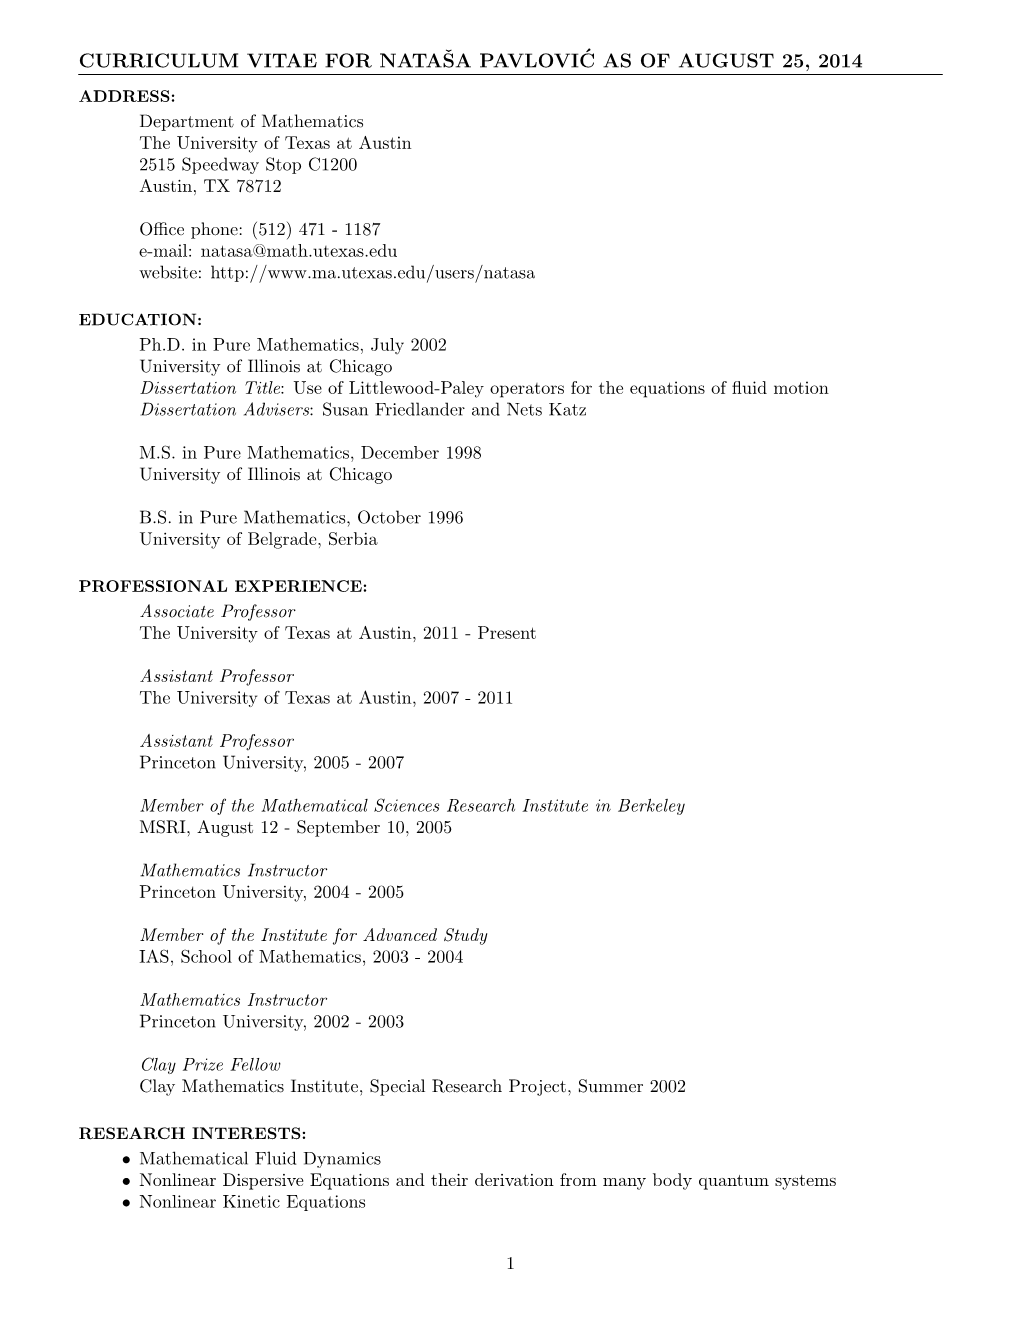 Curriculum Vitae for Nataša Pavlovi´C As of August 25, 2014